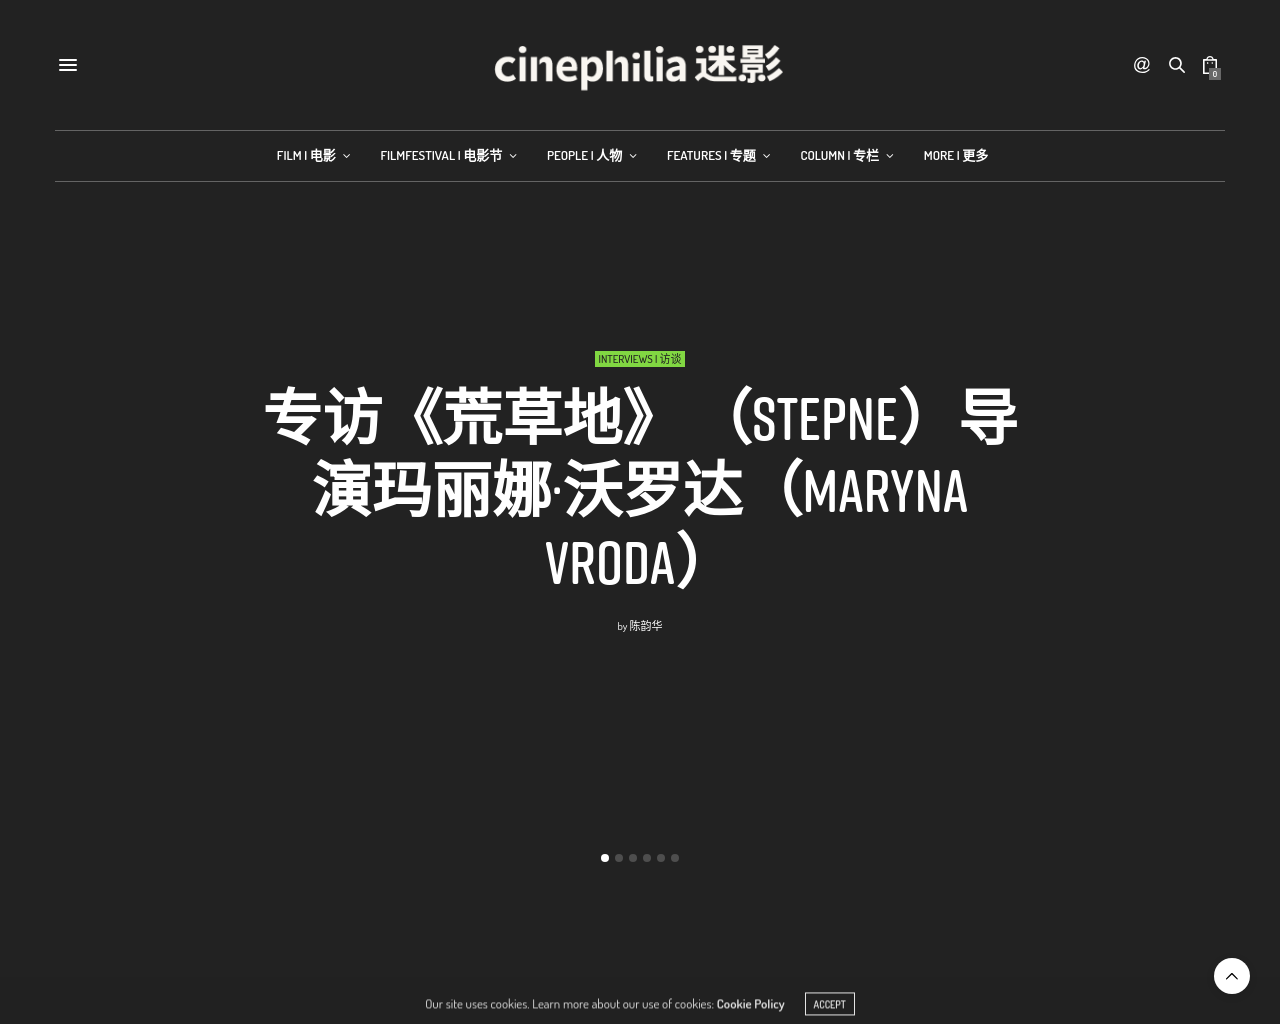 cinephilia.net